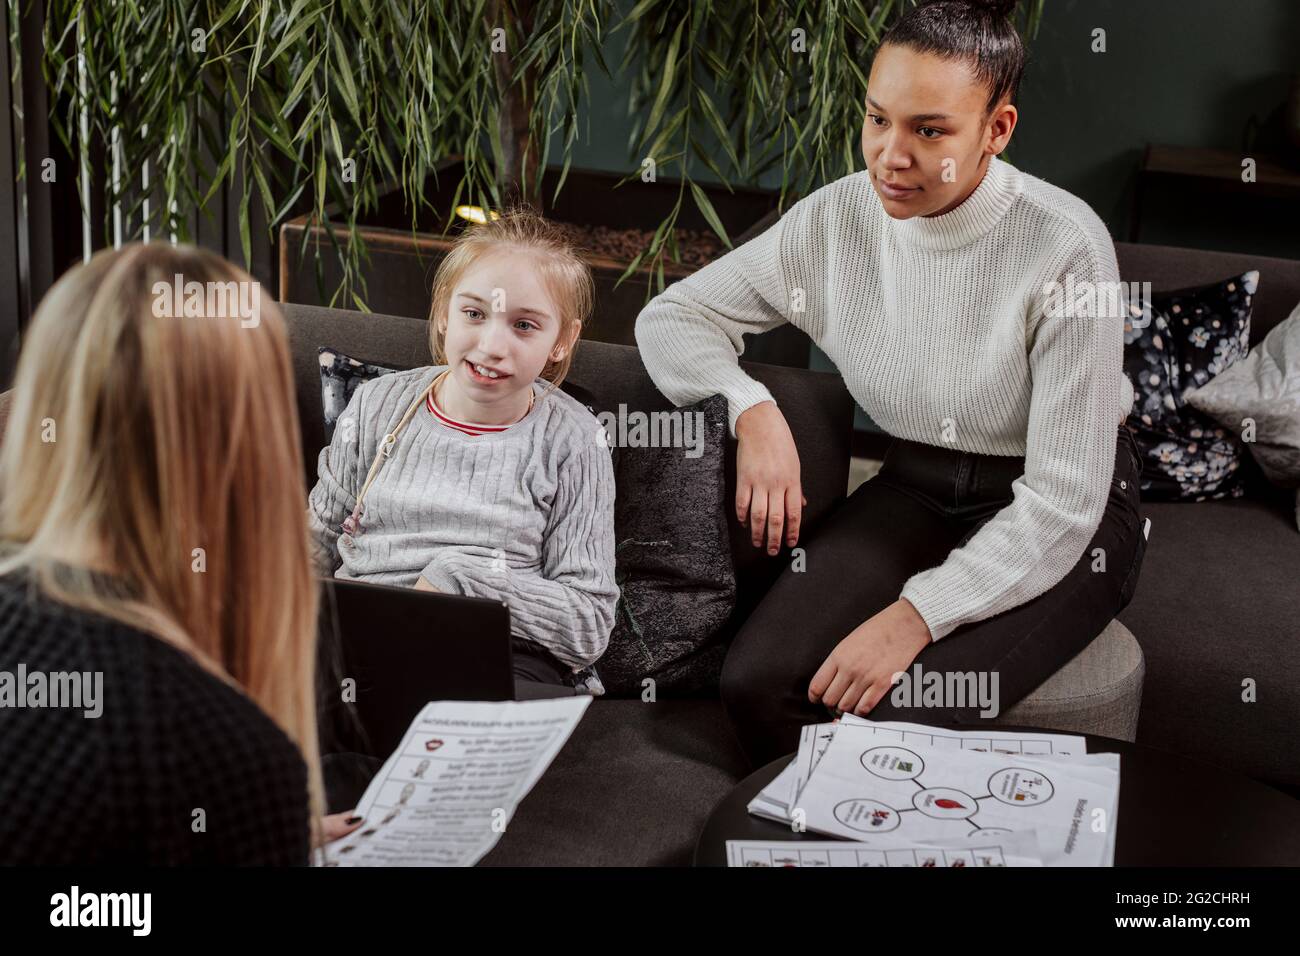 Women teaching girl at home Stock Photo